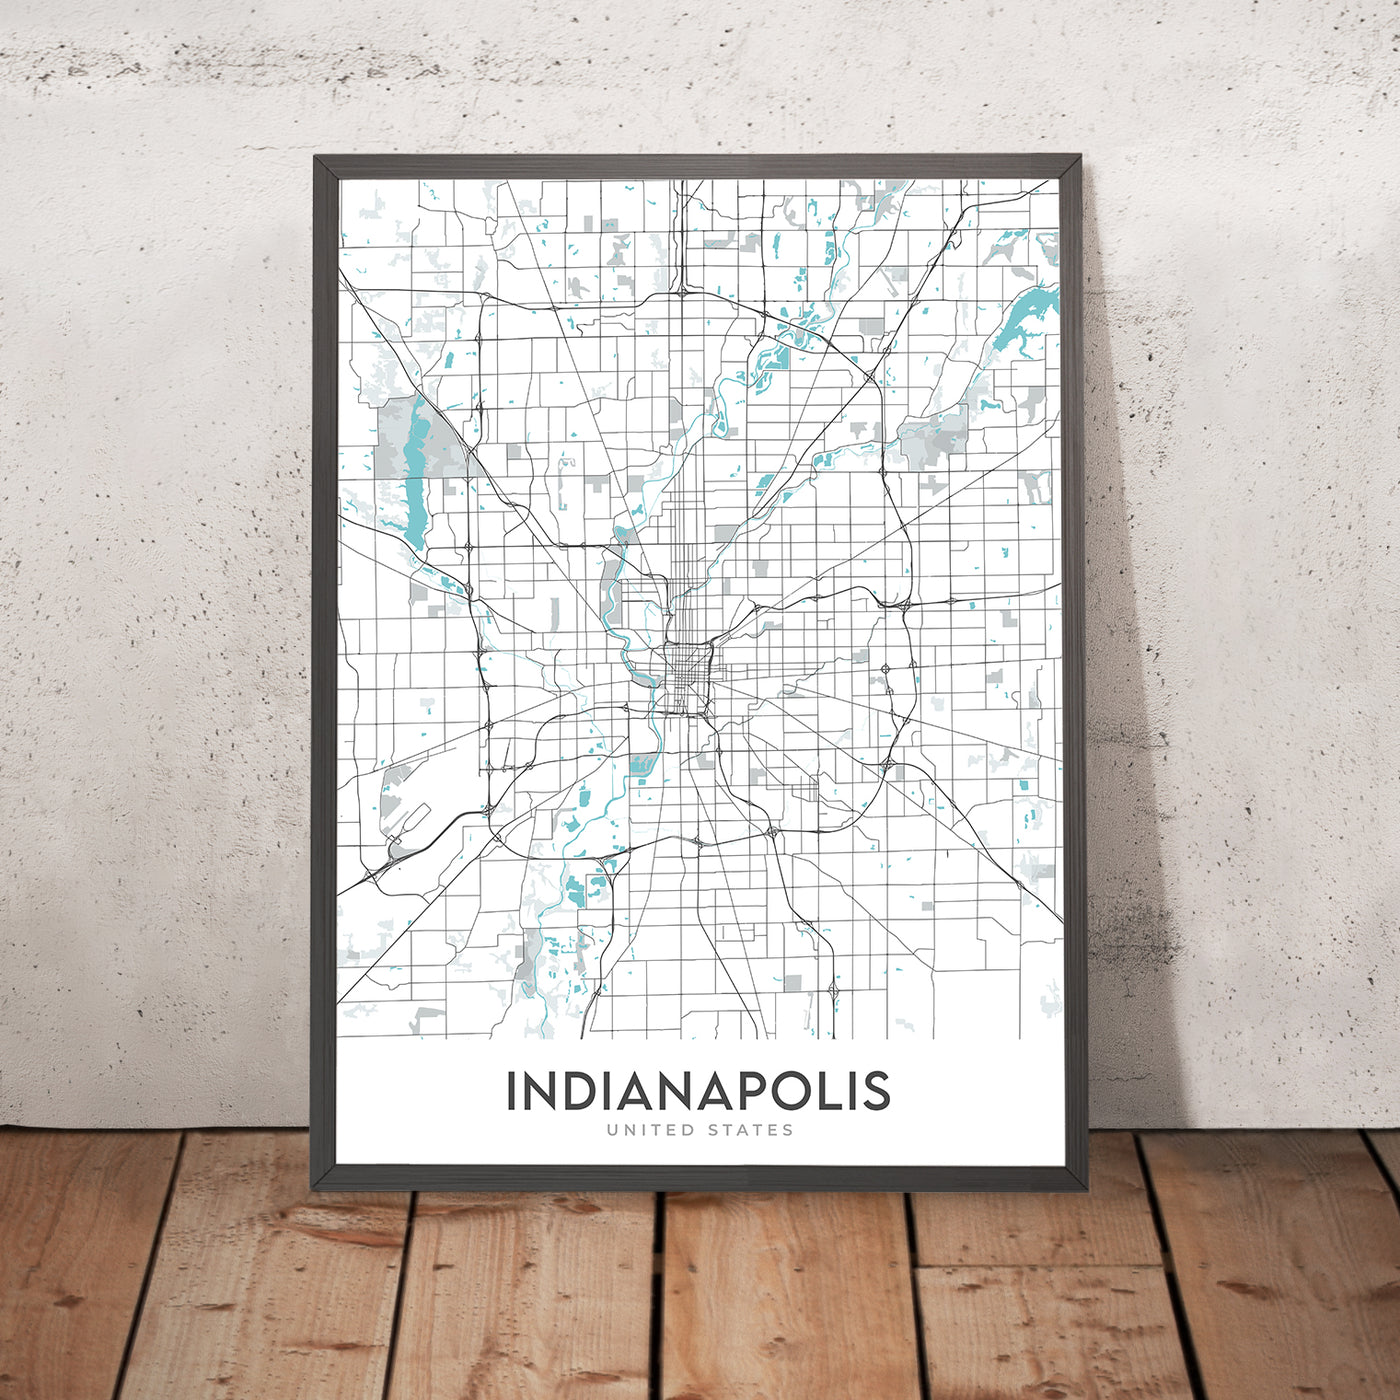 Moderner Stadtplan von Indianapolis, IN: Innenstadt, White River State Park, Indianapolis Zoo, Broad Ripple, Speedway